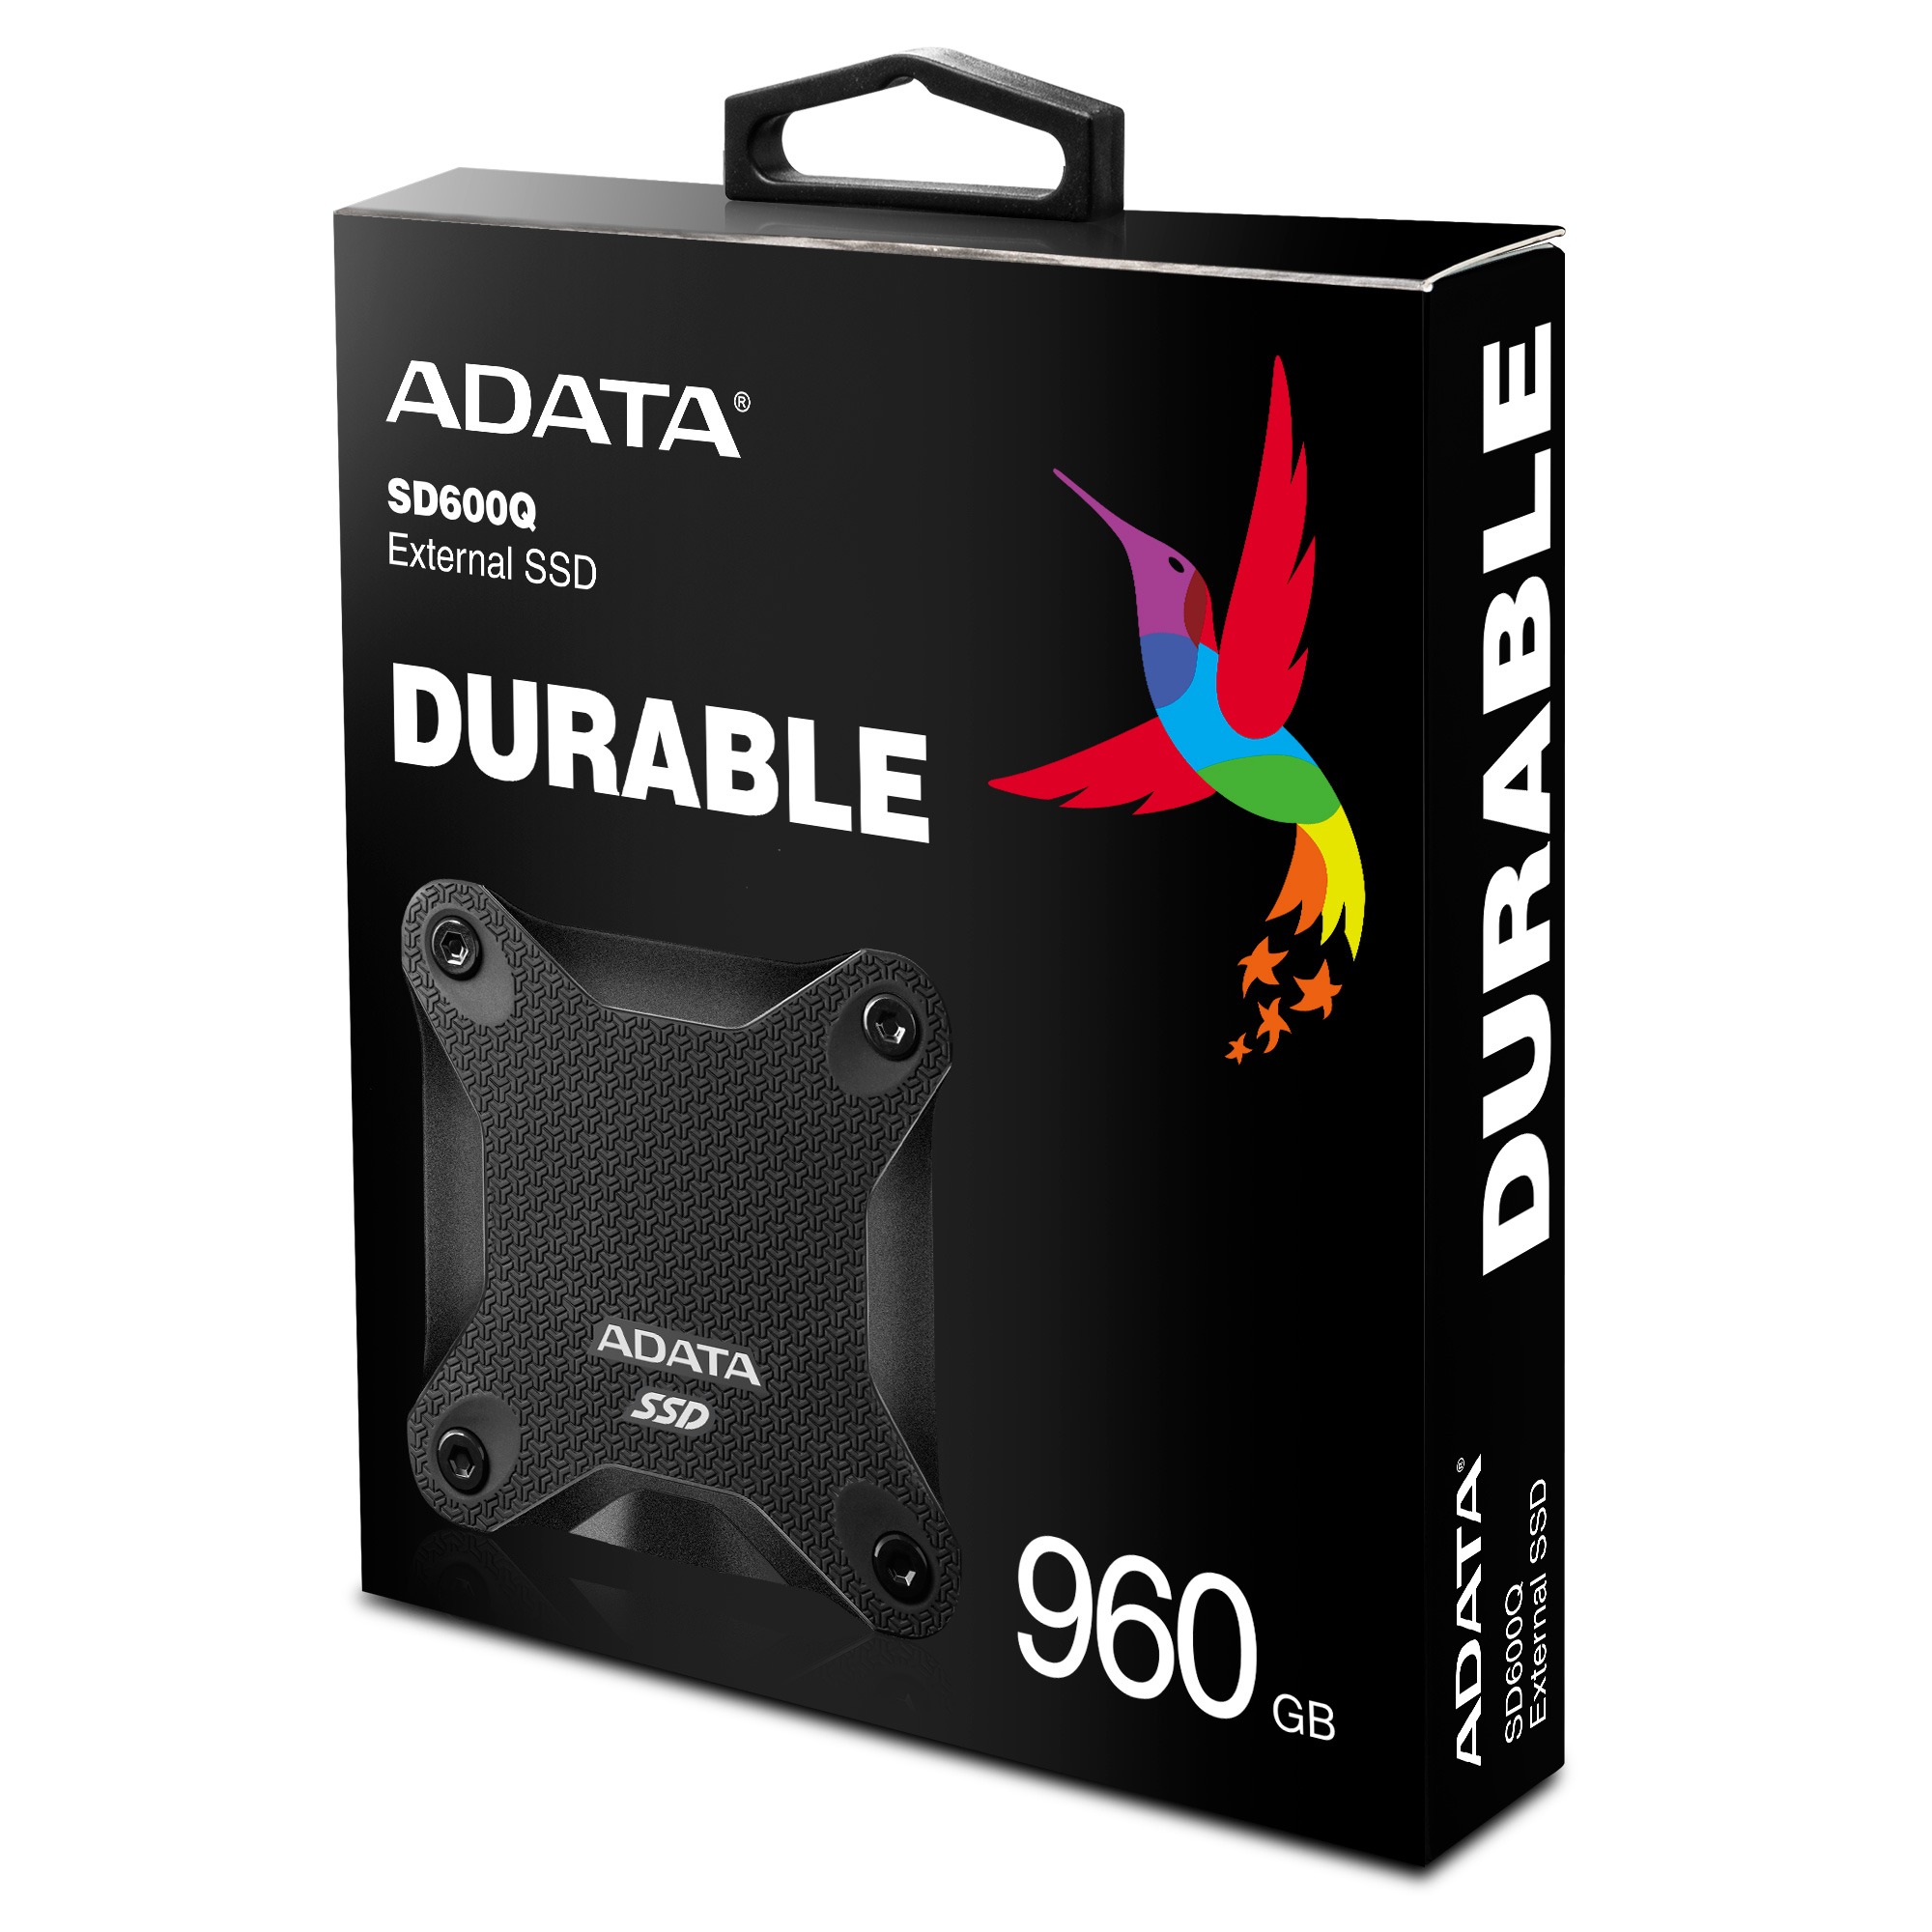 ADATA представила новый SSD ADATA SD600Q